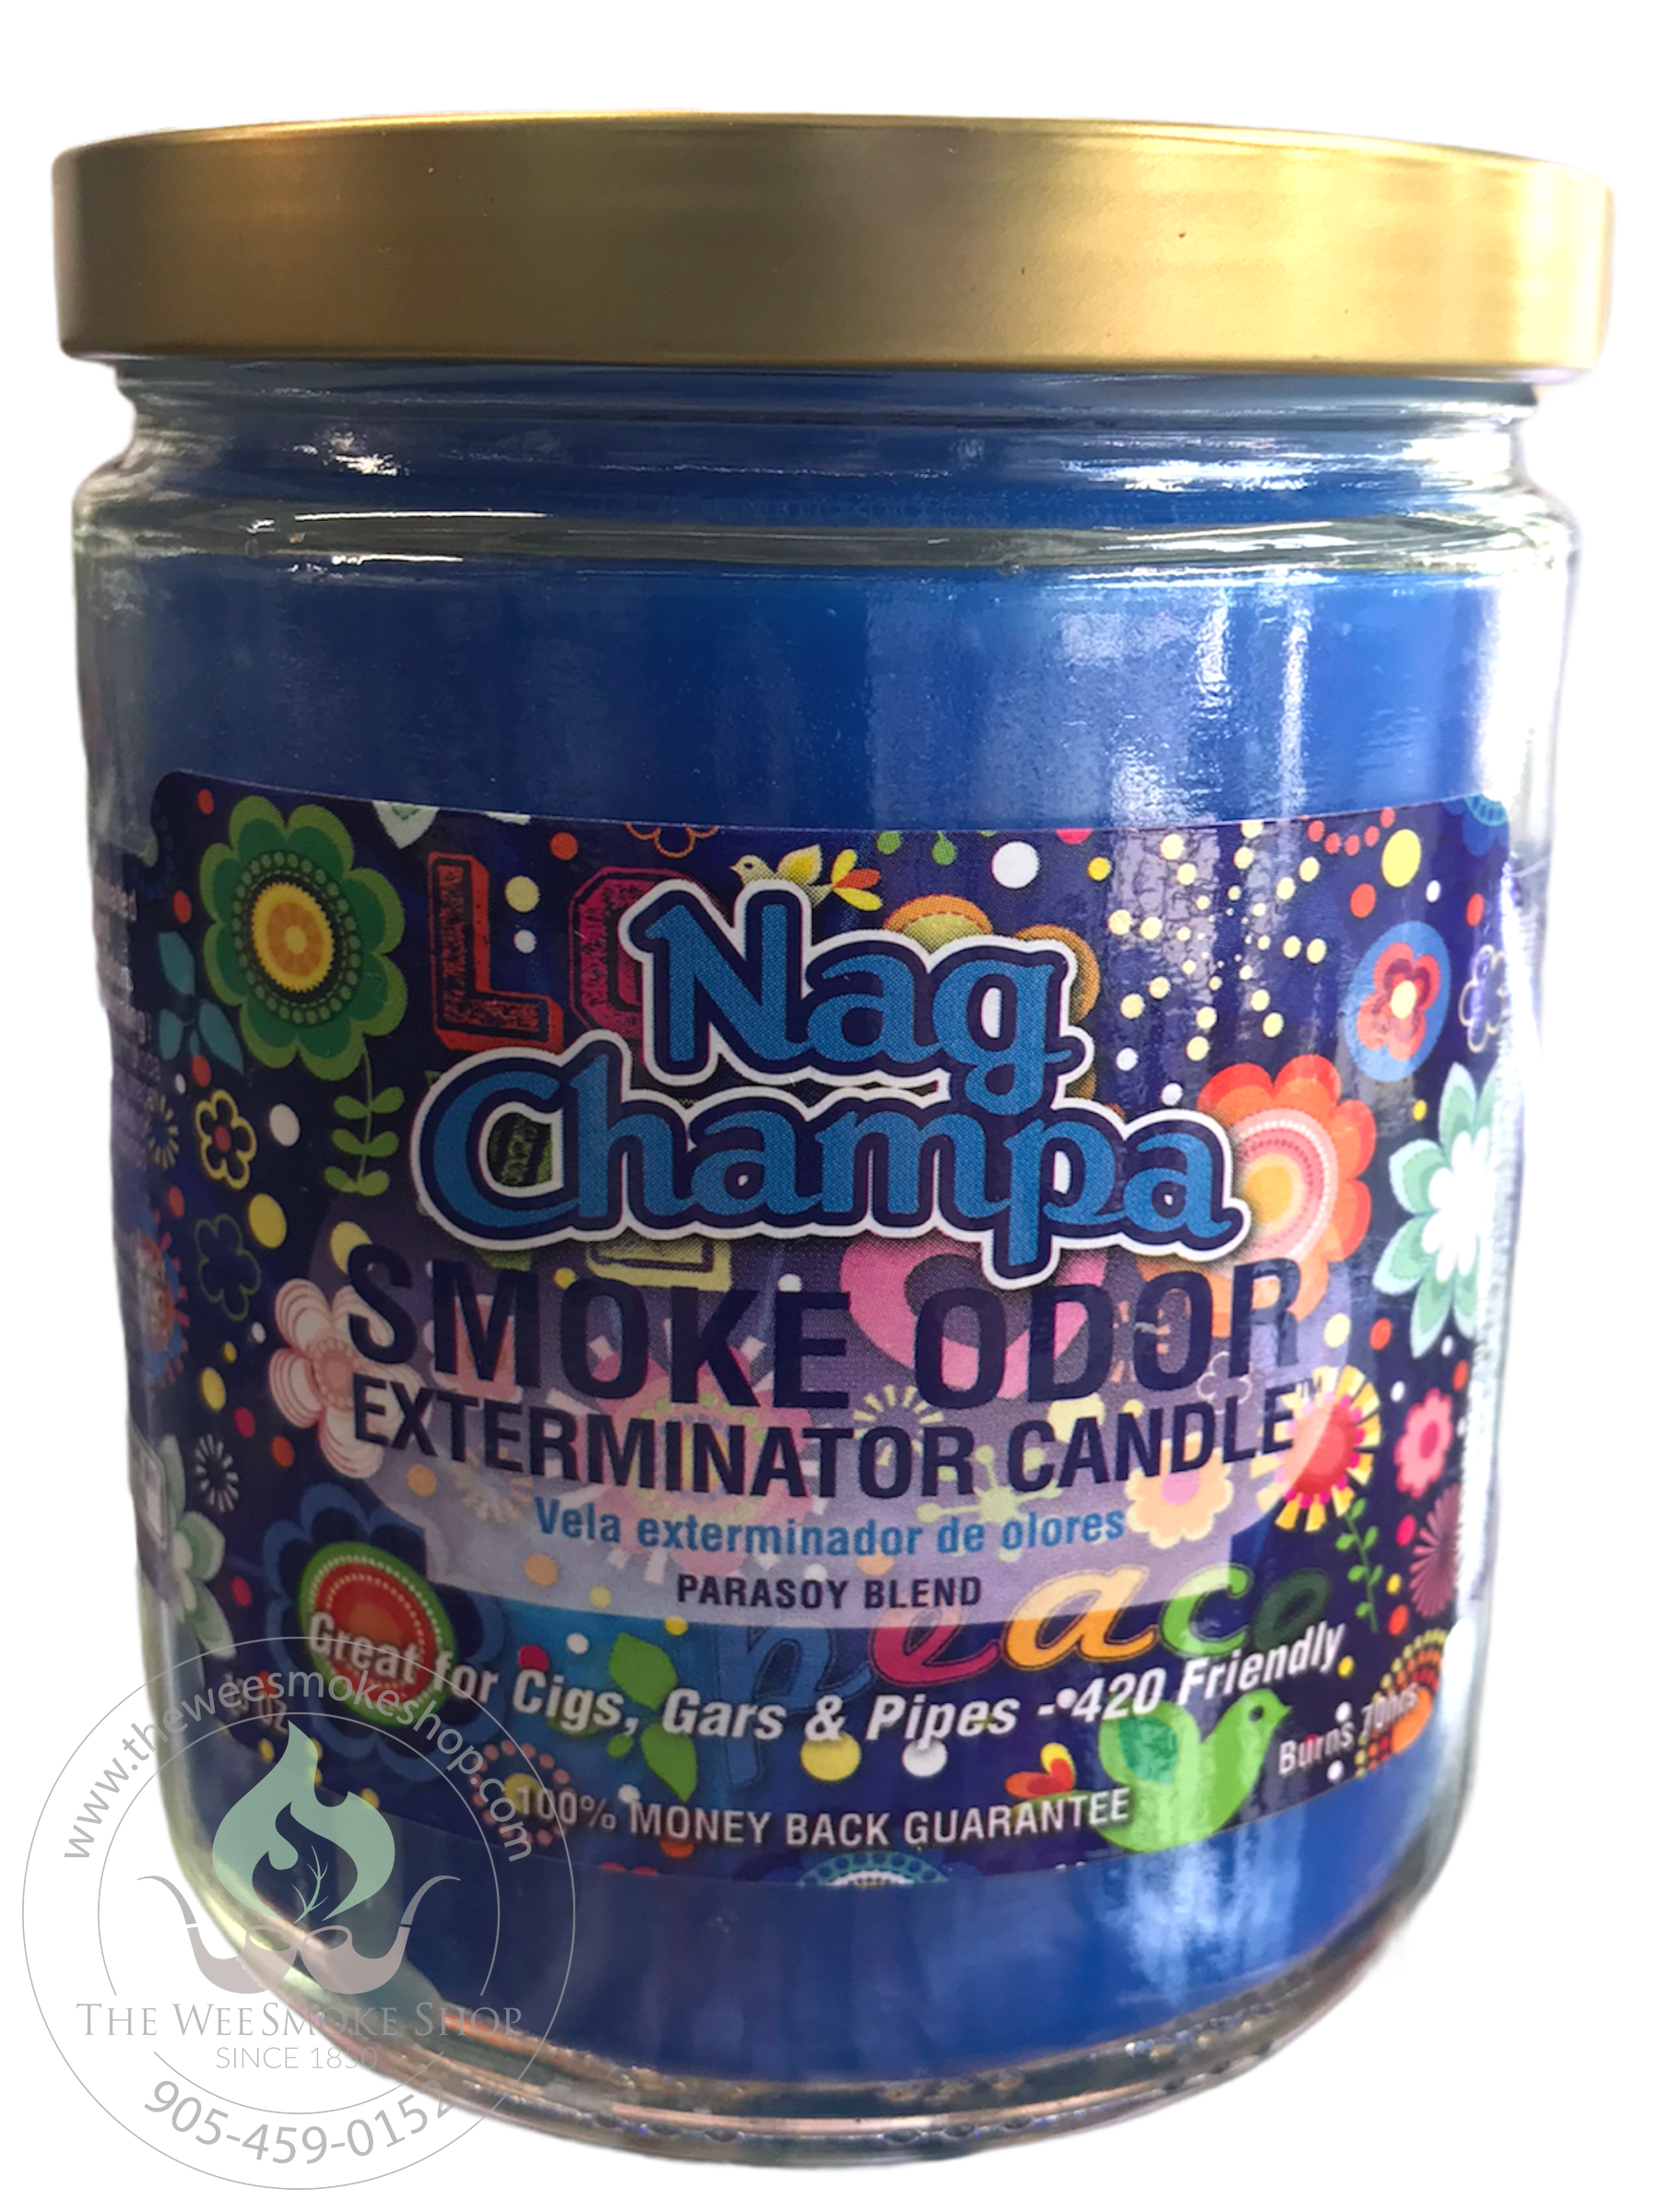 Nag Champa Smoke Odor Exterminator Candle - Wee Smoke Shop